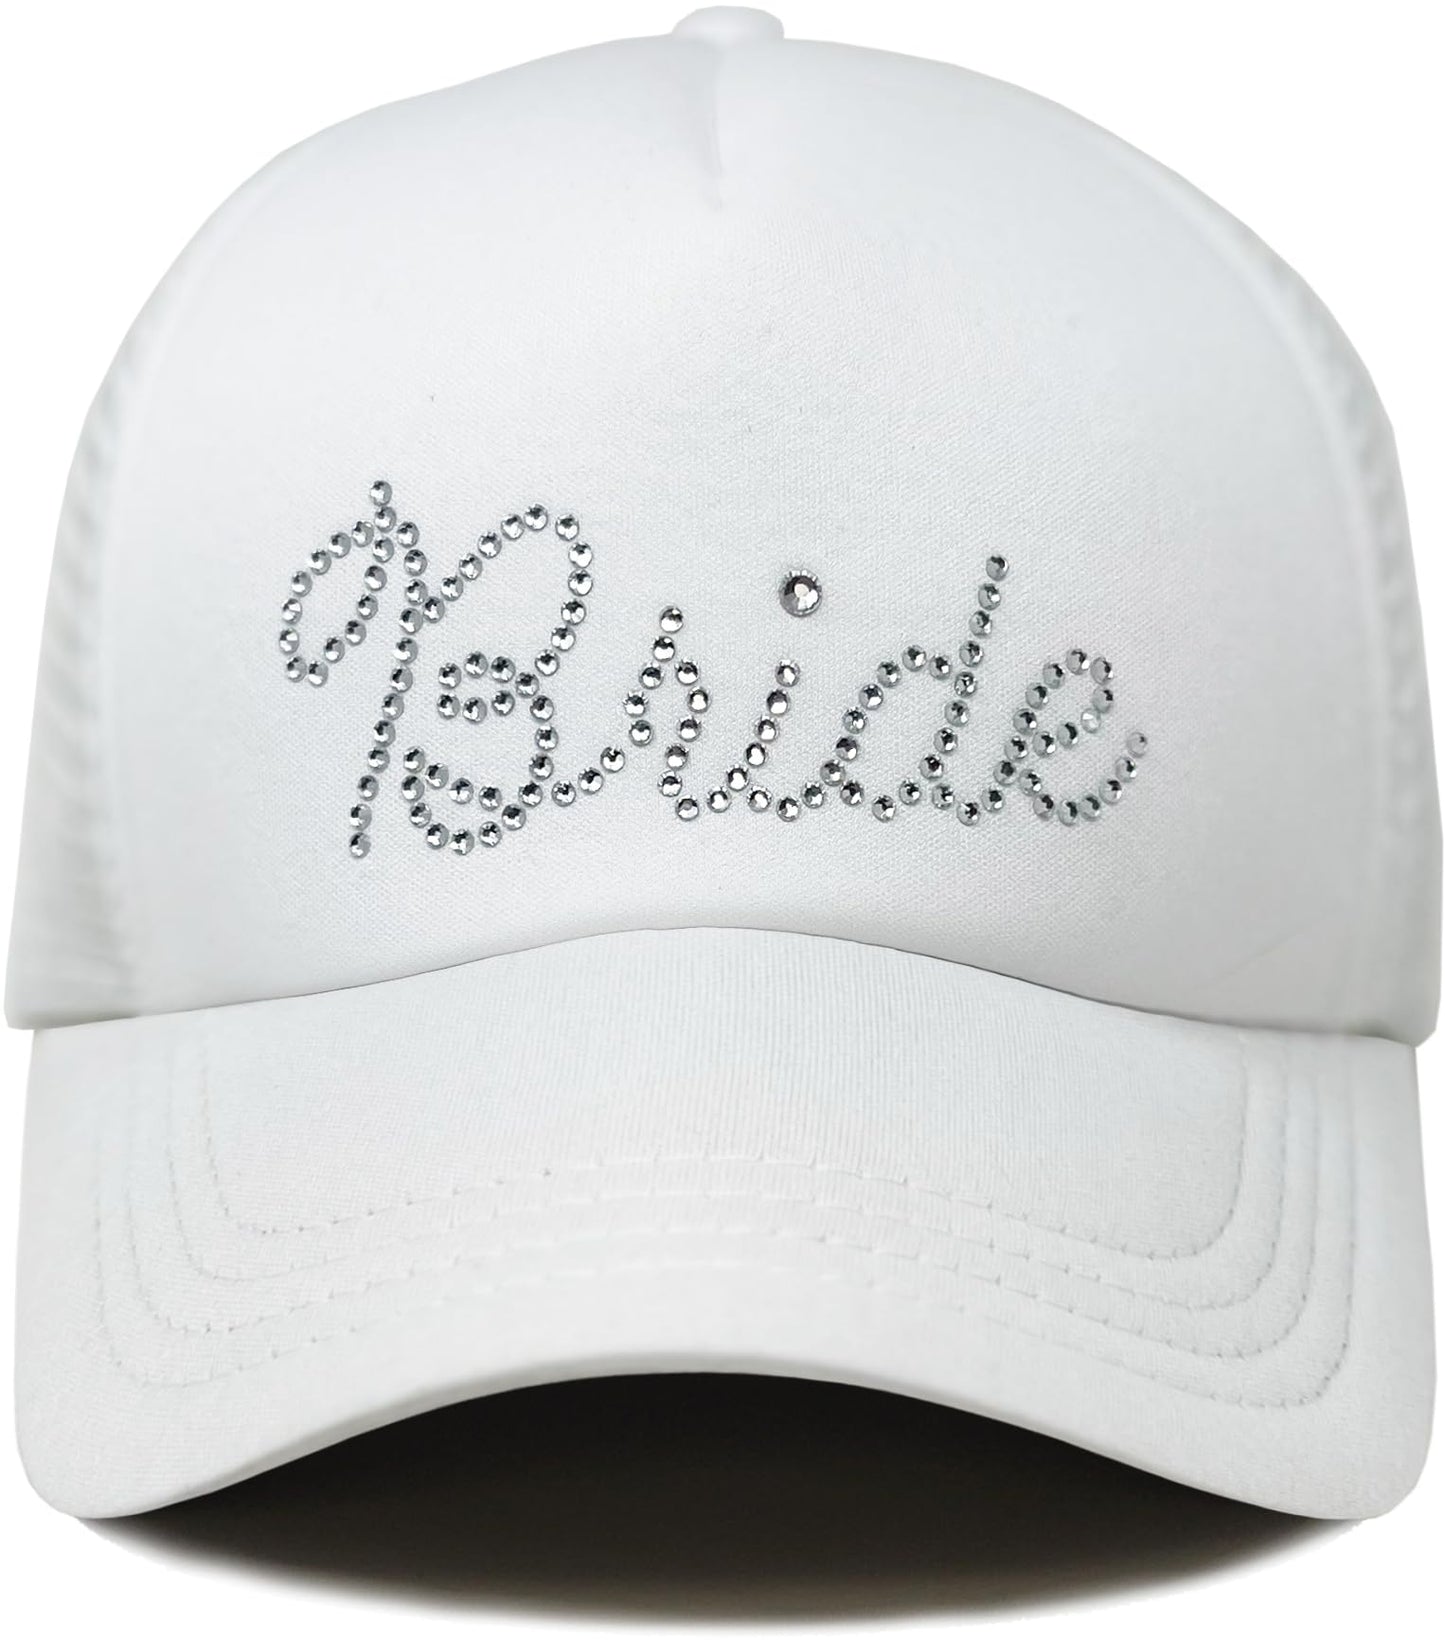 Bride - Rhinestone Embellished Trucker Hats by Funky Junque